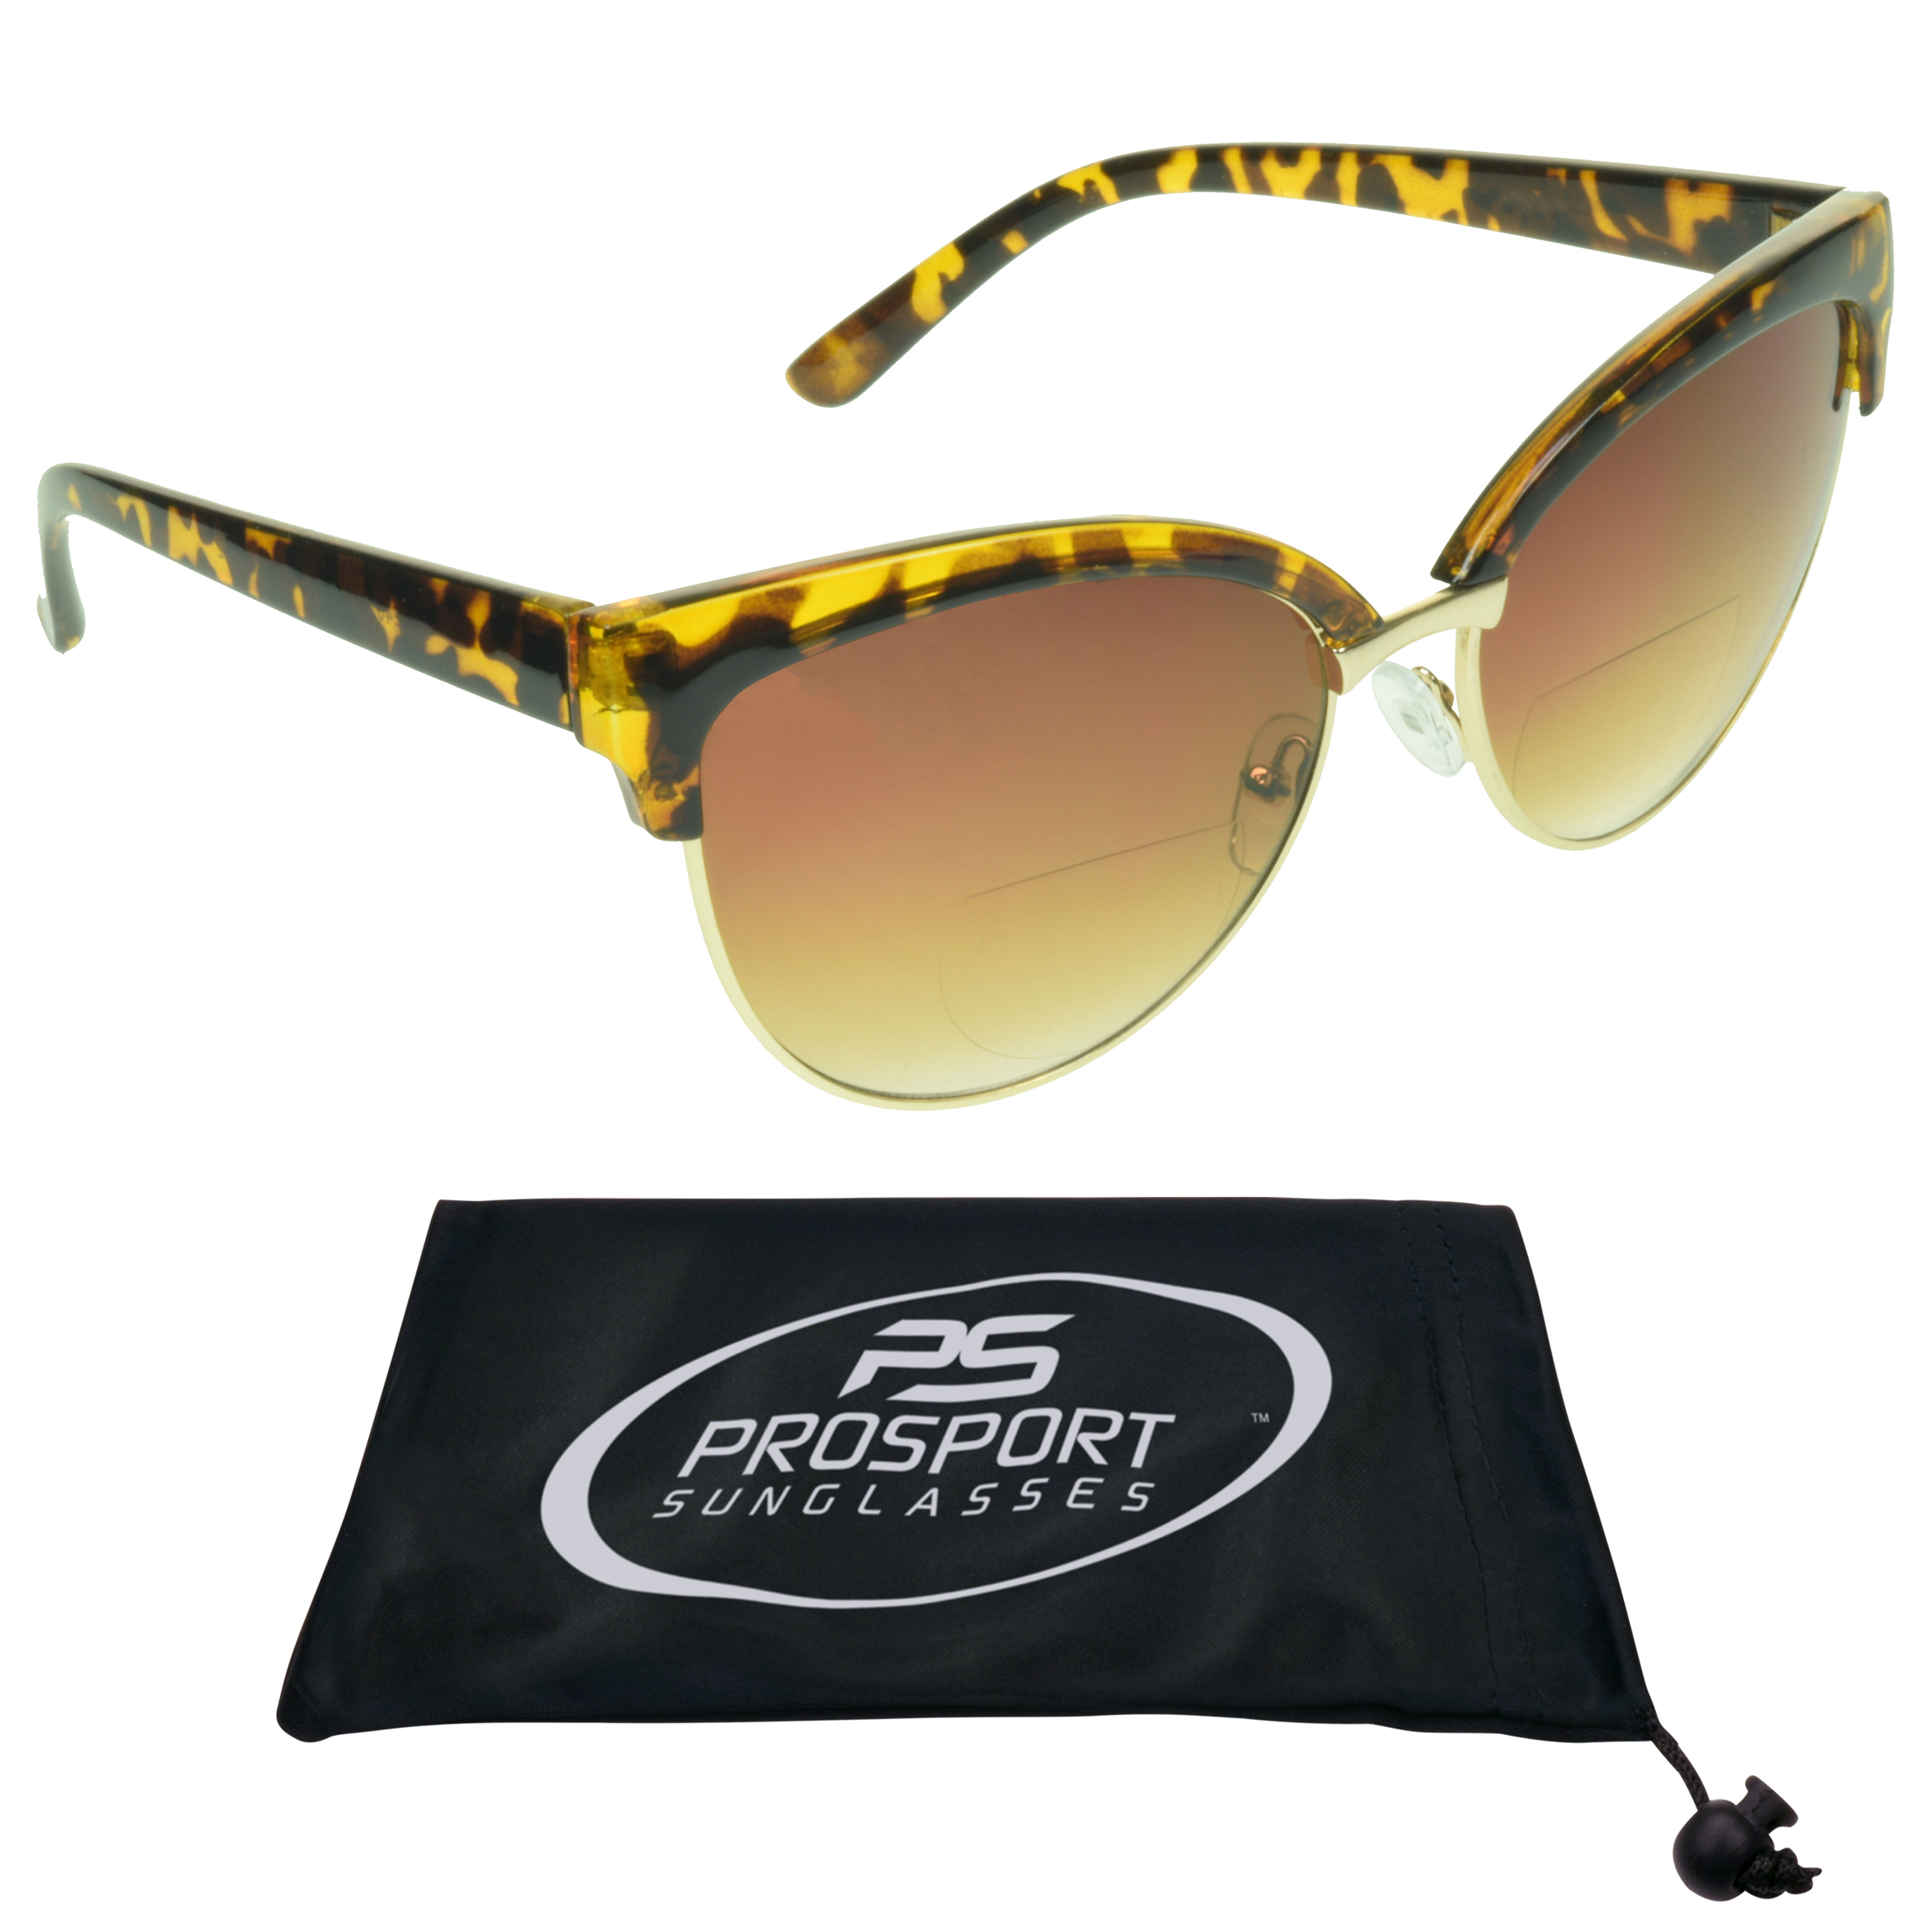 proSPORT Women Bifocal Reading Cateye Fashion Horn Rim Sunglasses Tortoise Gold Frame Brown Lens +2.75 - image 1 of 5